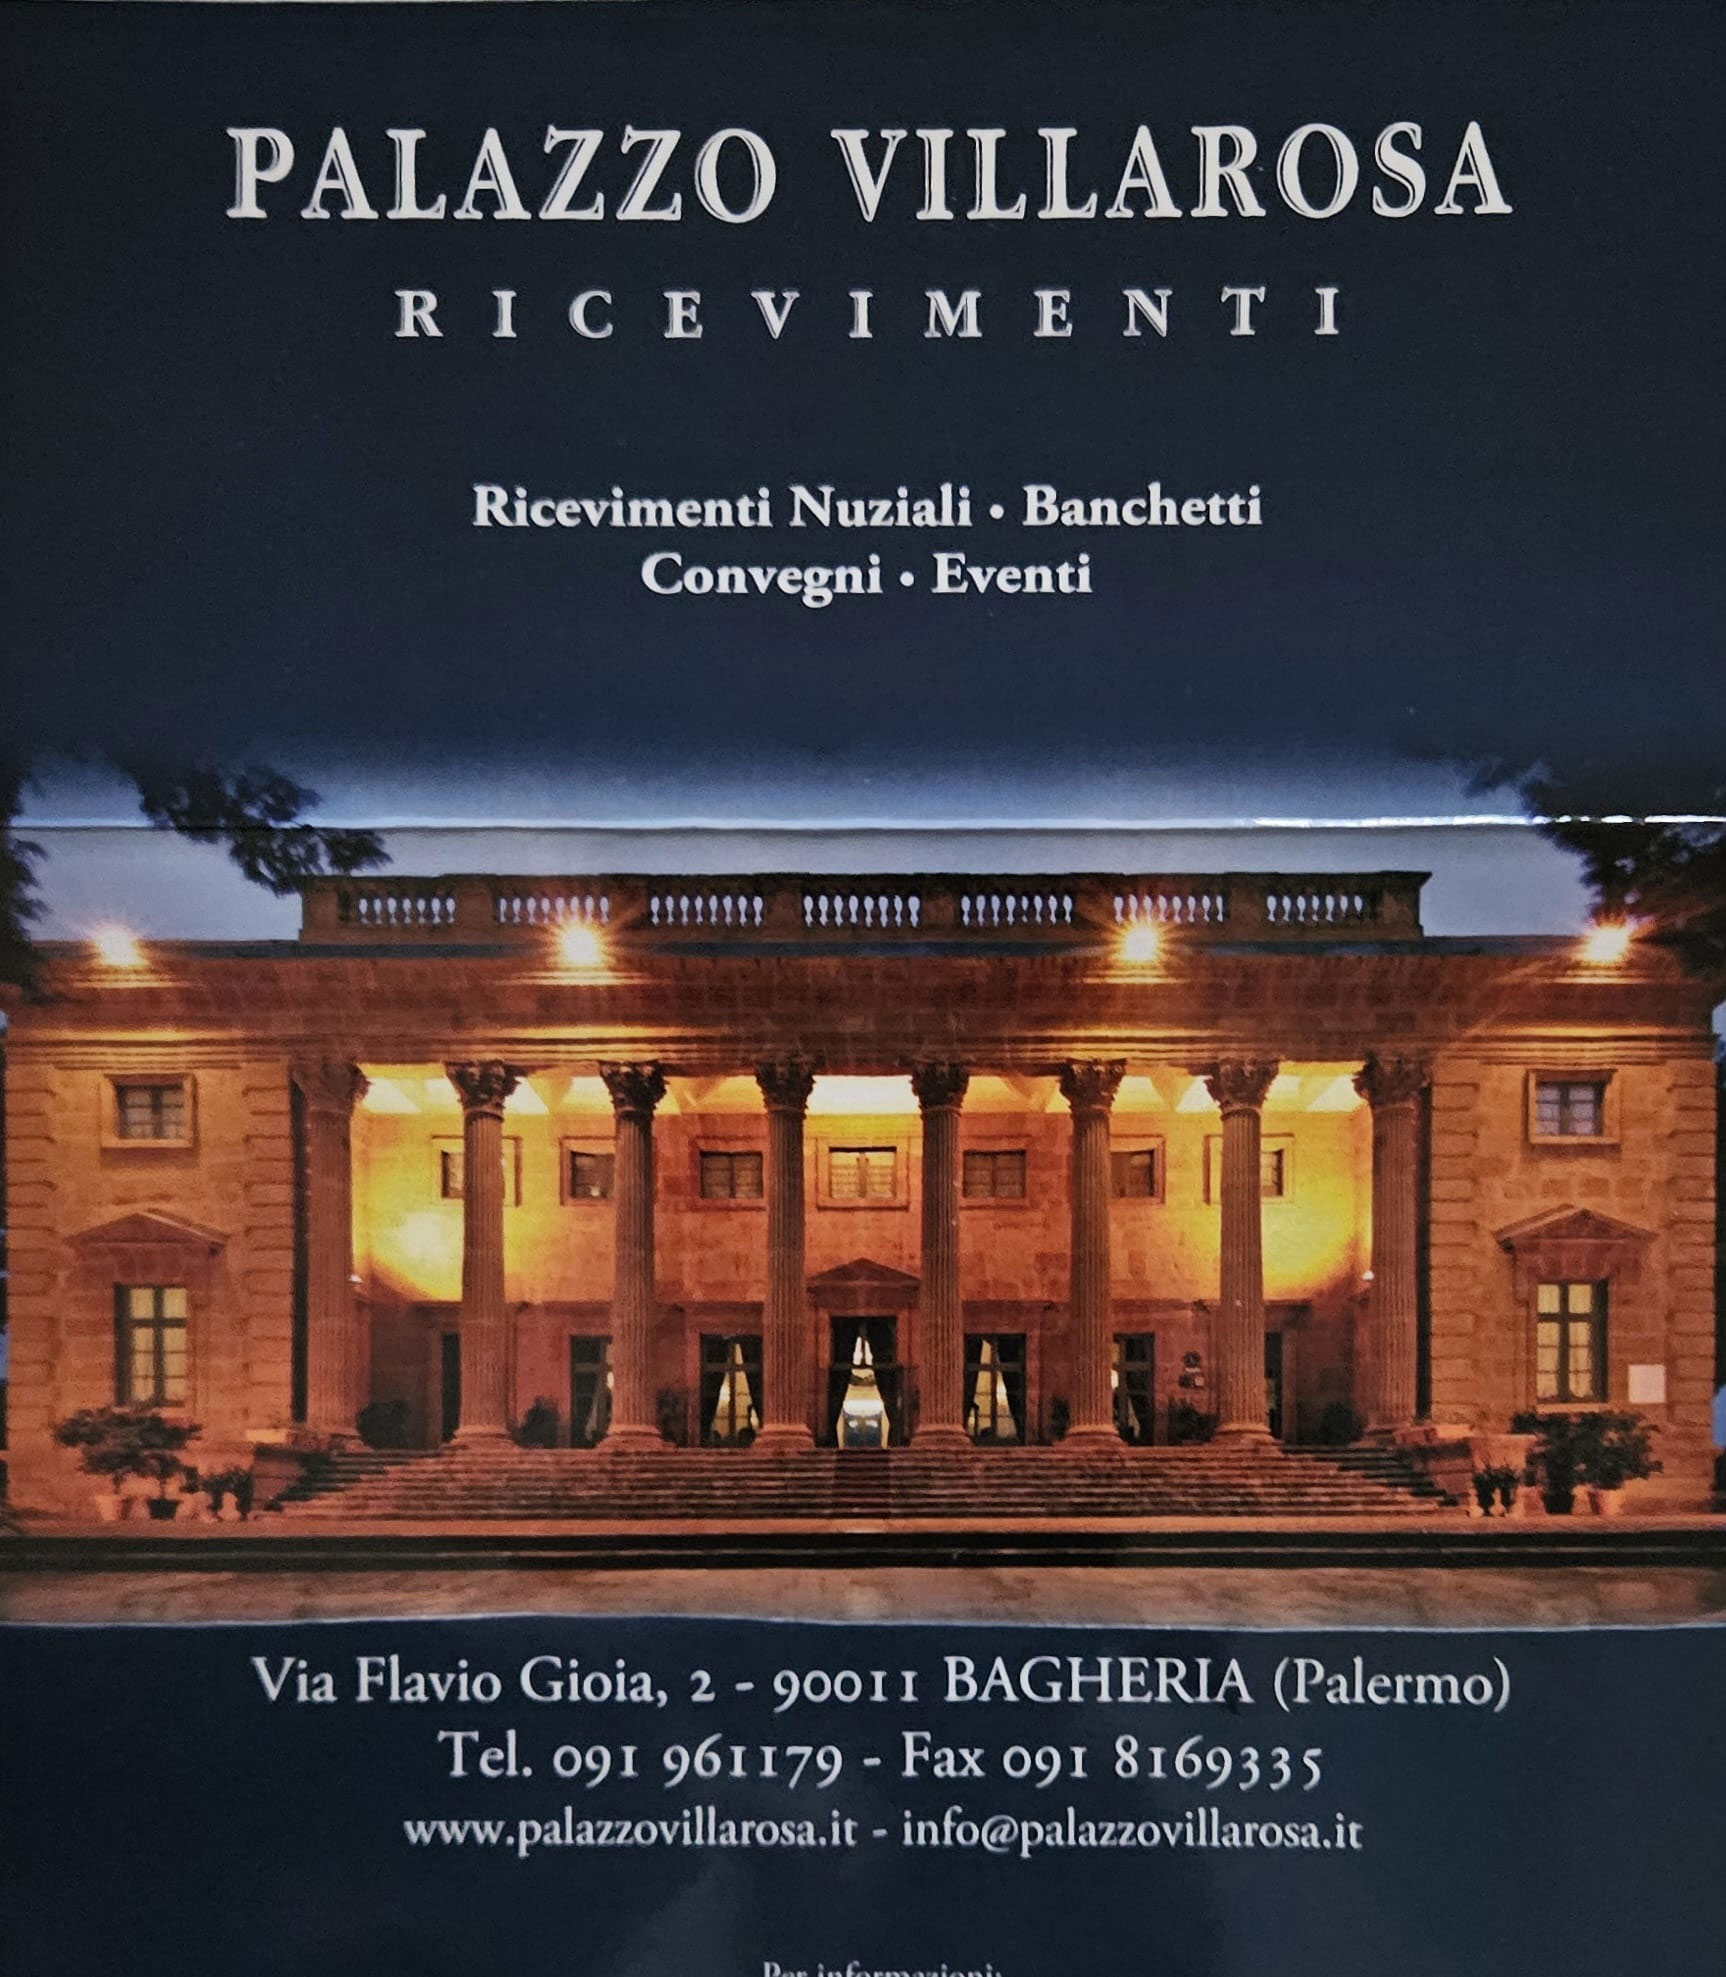 Palazzo Villarosa